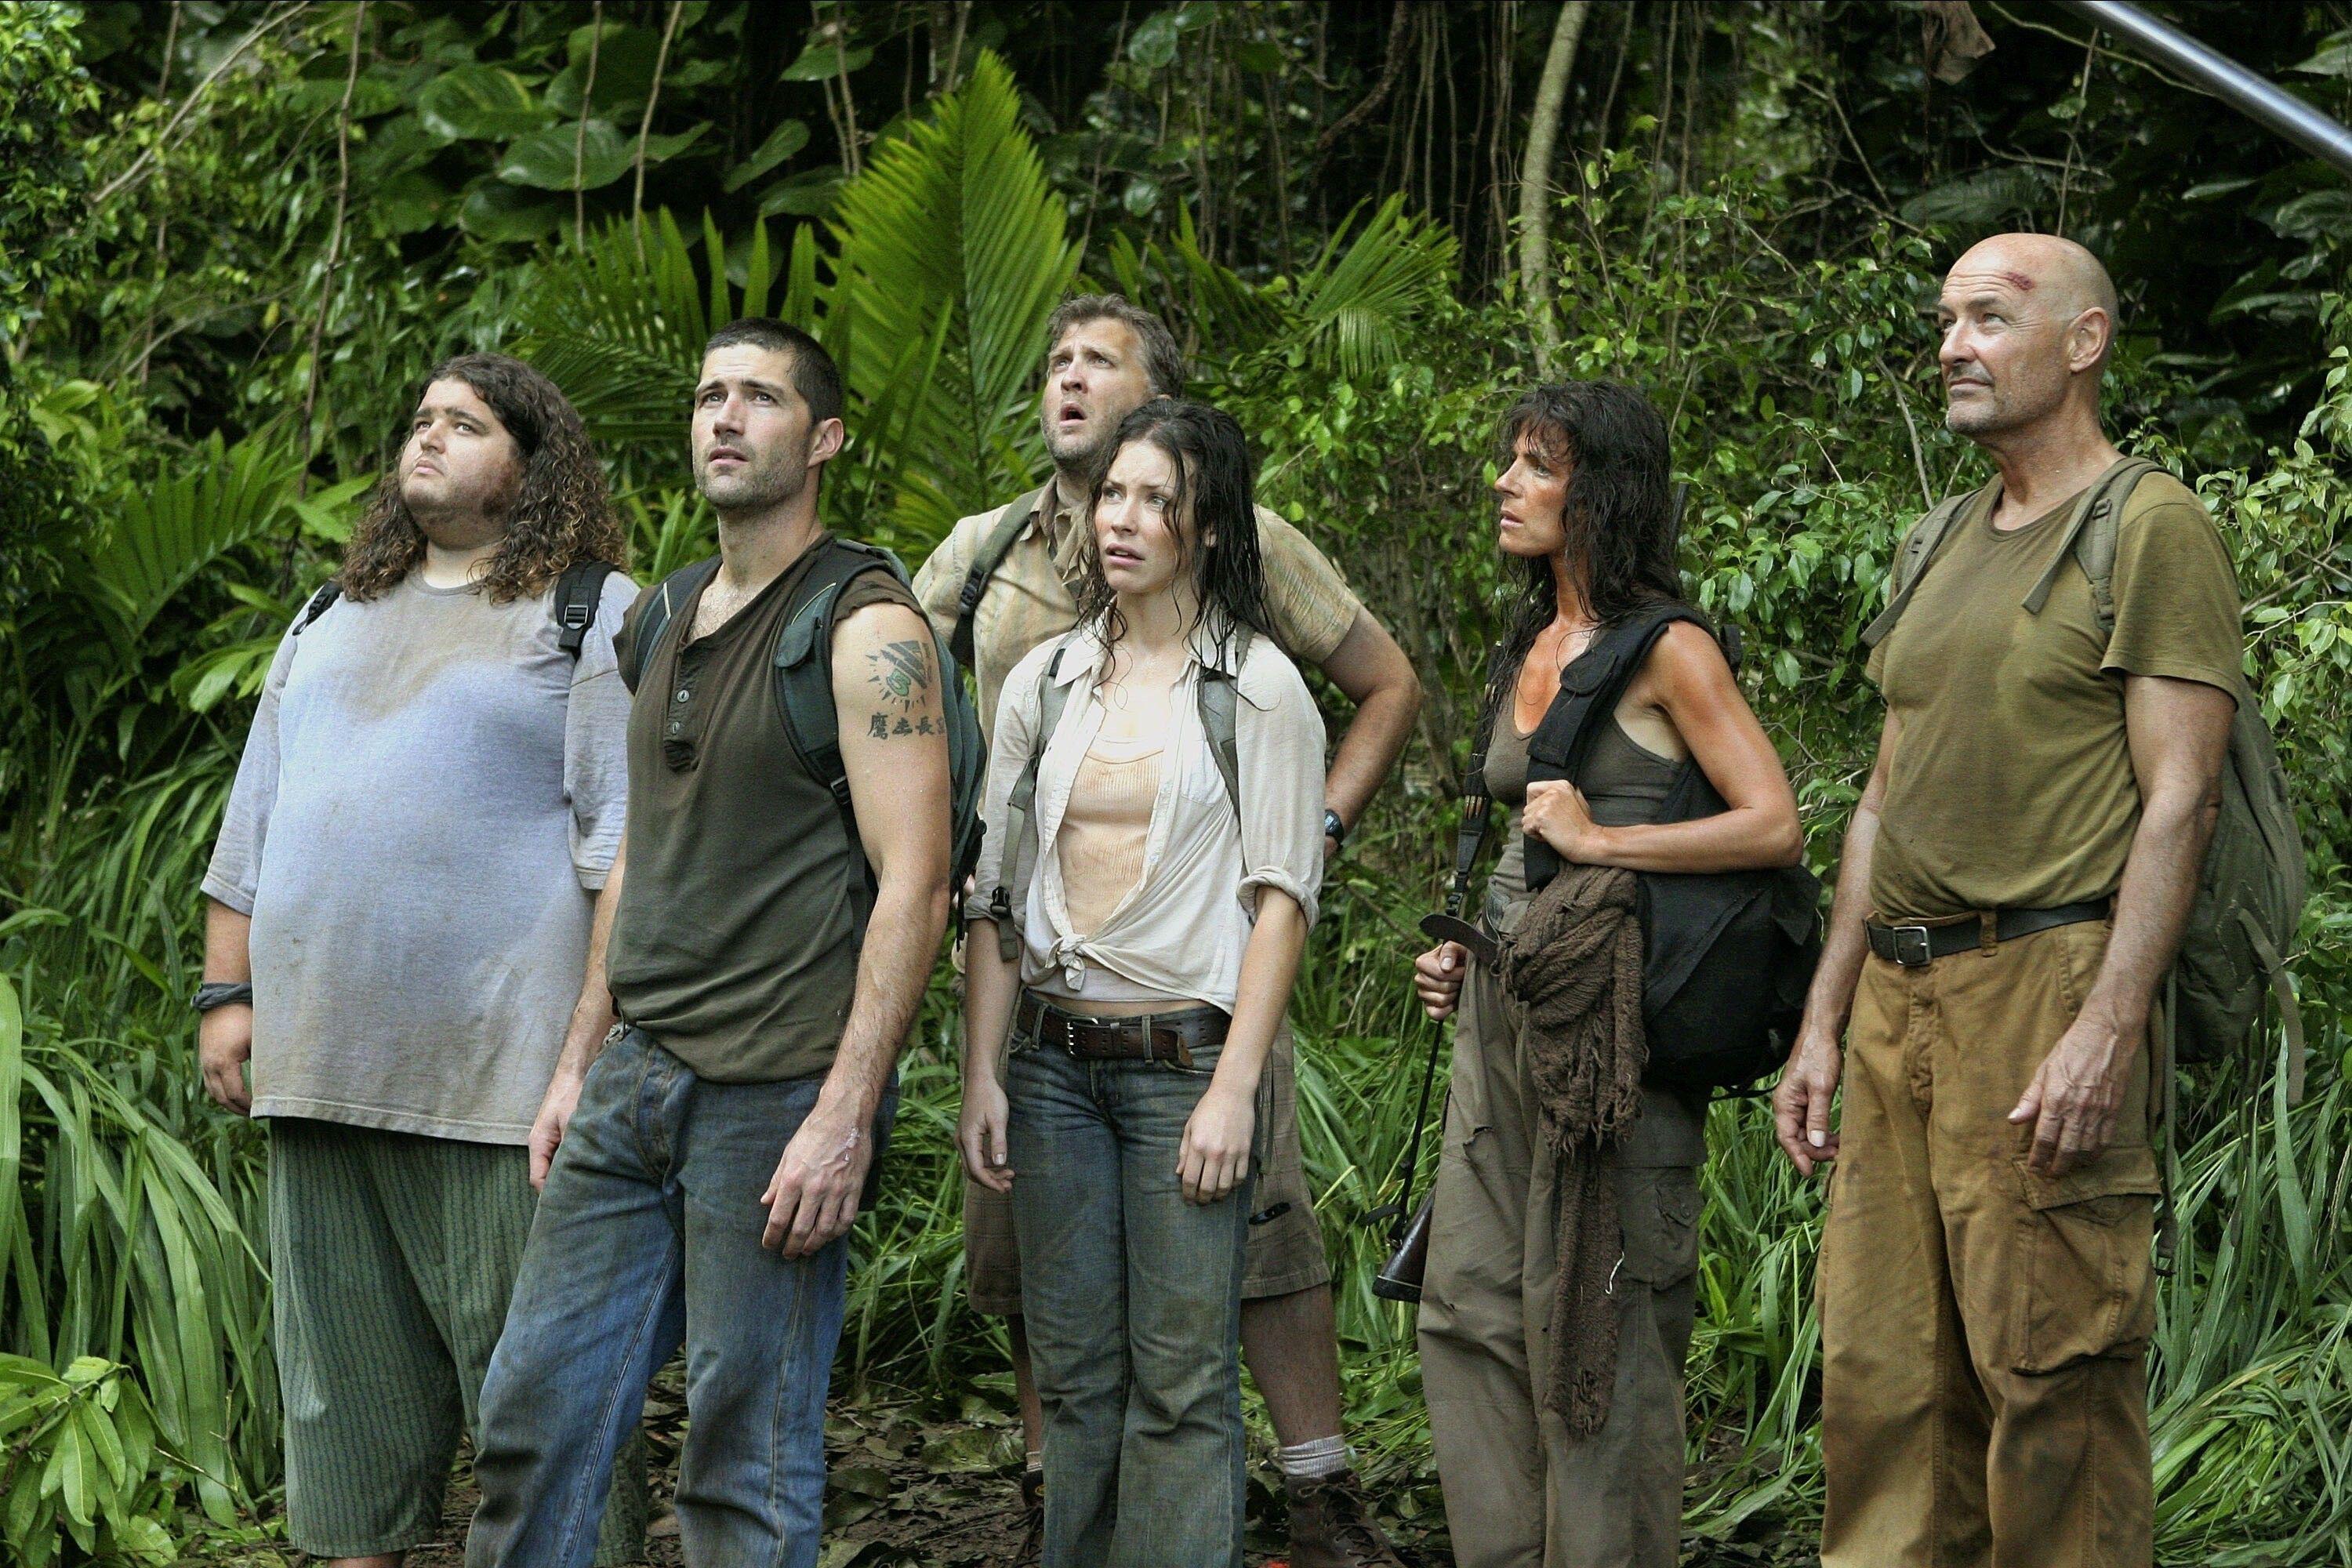 Jorge Garcia comme Hurley, Matthew Fox comme Jack, Daniel Roebuck comme Arzt, Evangeline Lilly comme Kate, Mira Furlan comme Rousseau, Terry O'Quinn comme Locke dans Lost